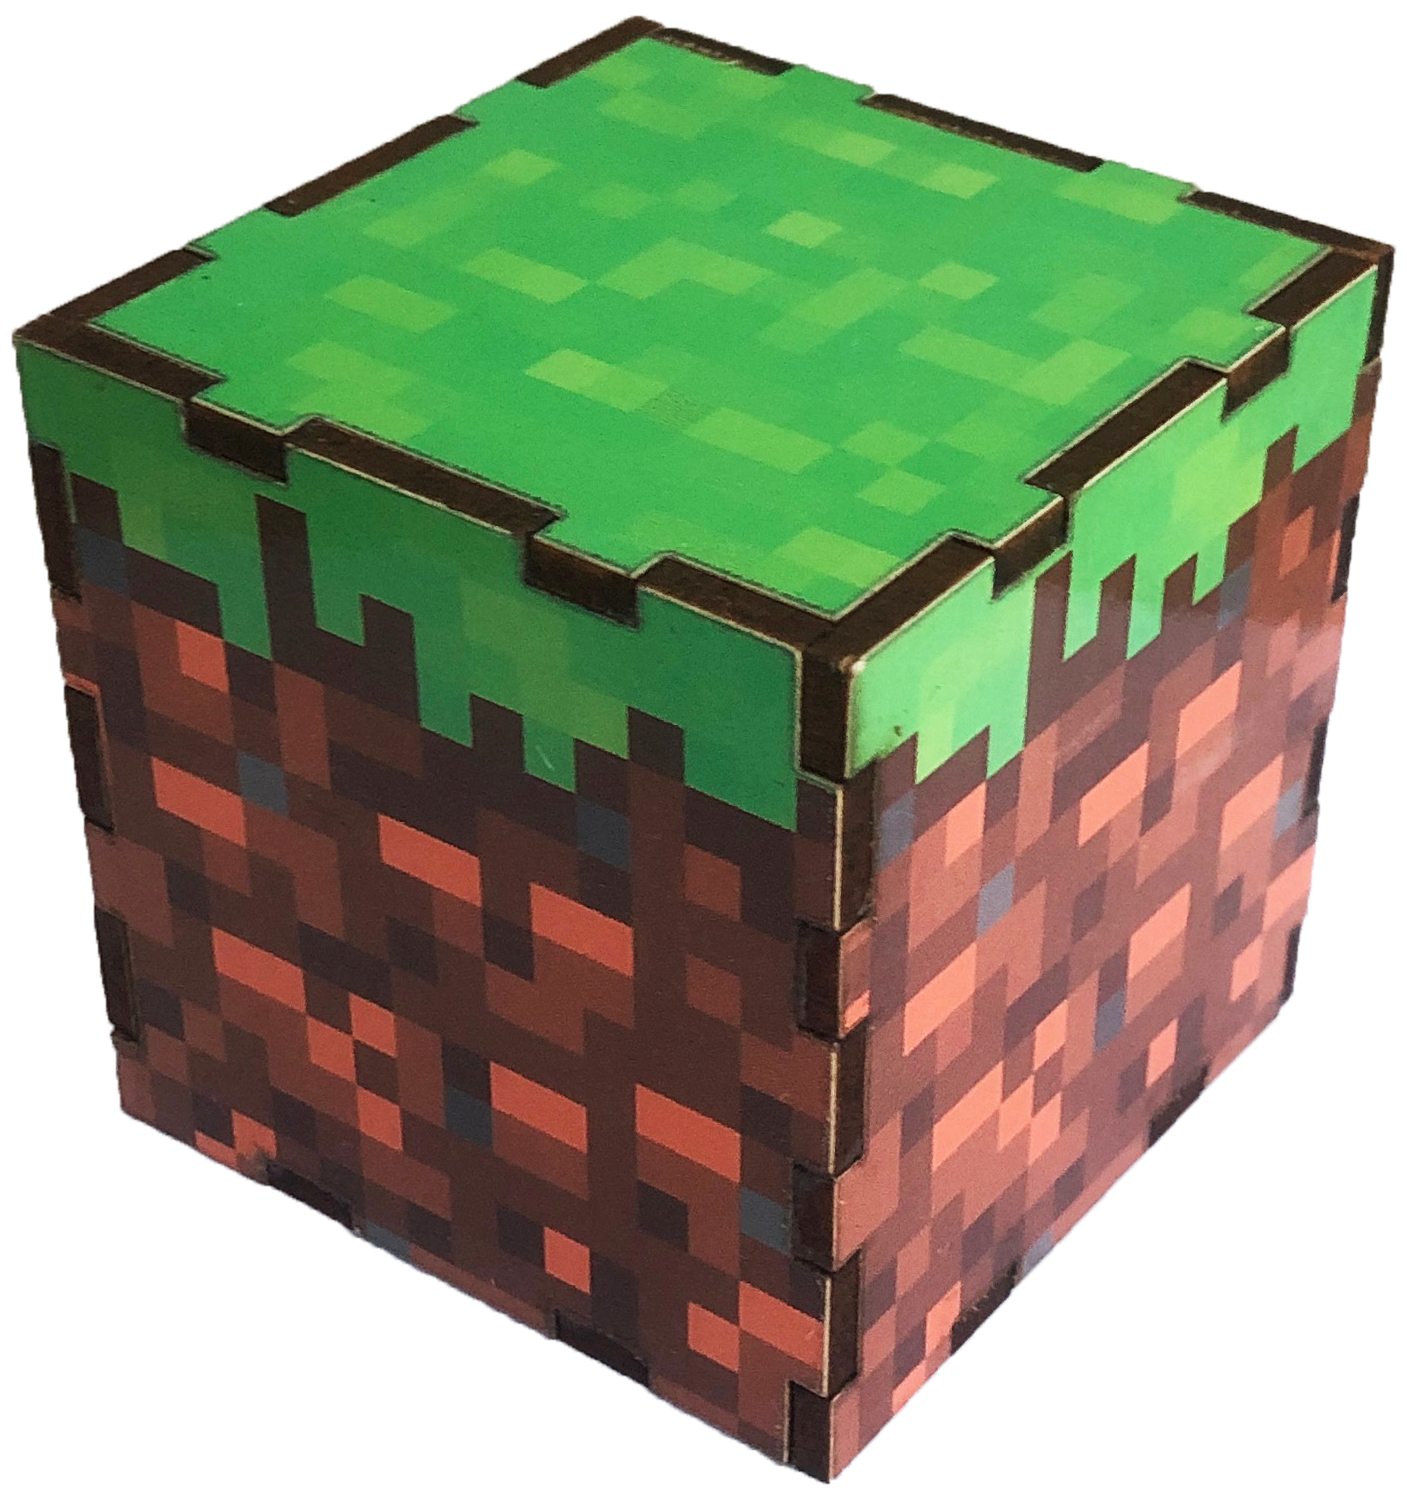 тема: Minecraft, материал: дерево, количество фигурок в наборе: 1 шт. 